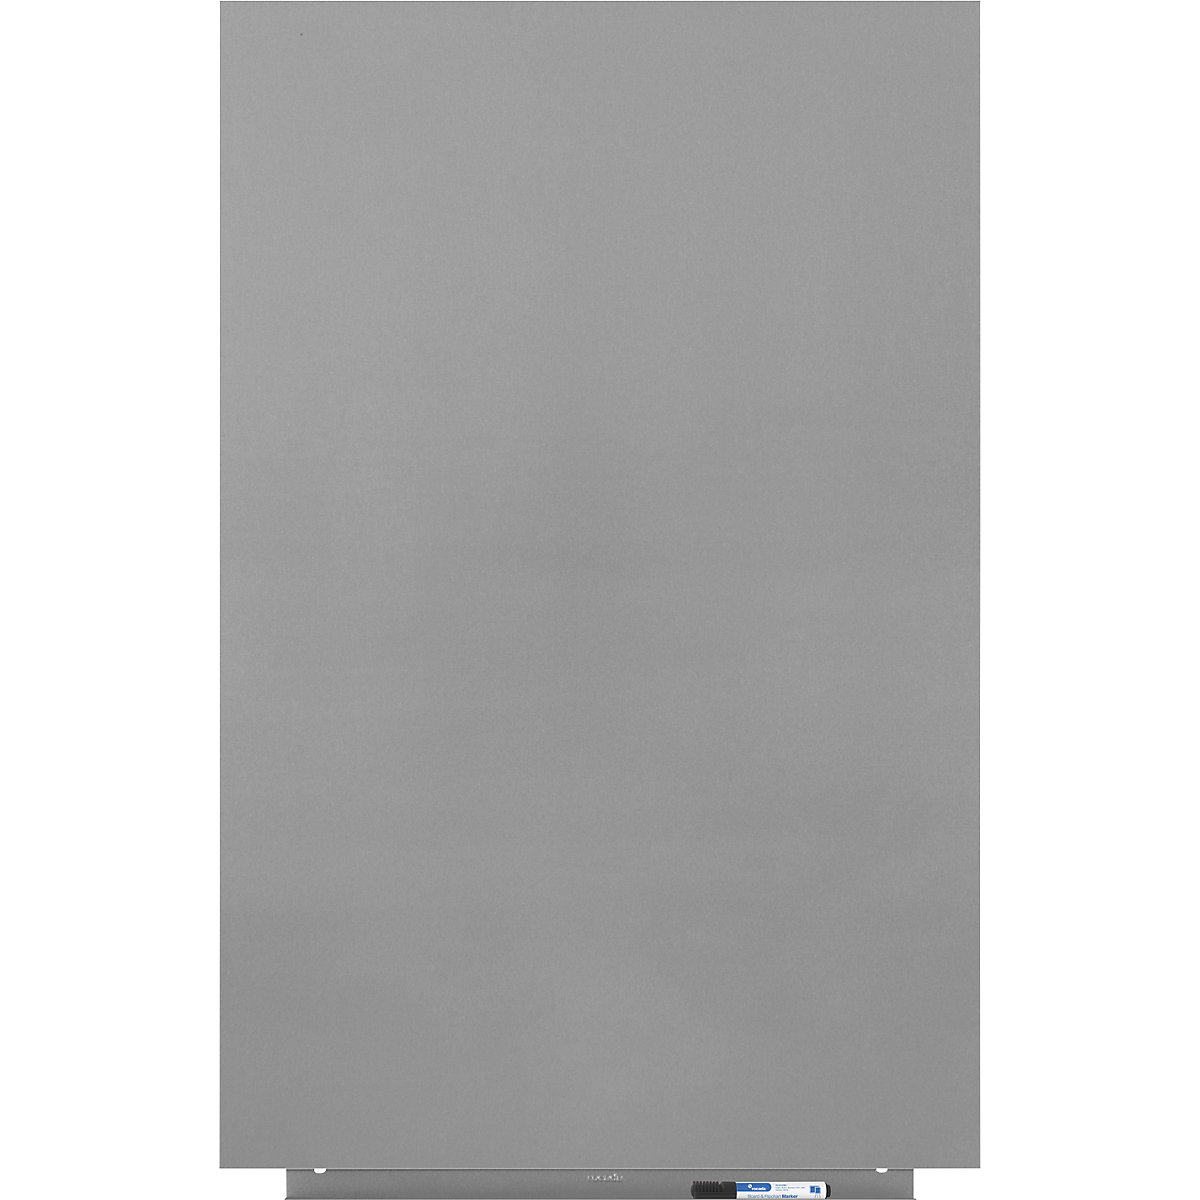 Whiteboard module (Product illustration 42)-41